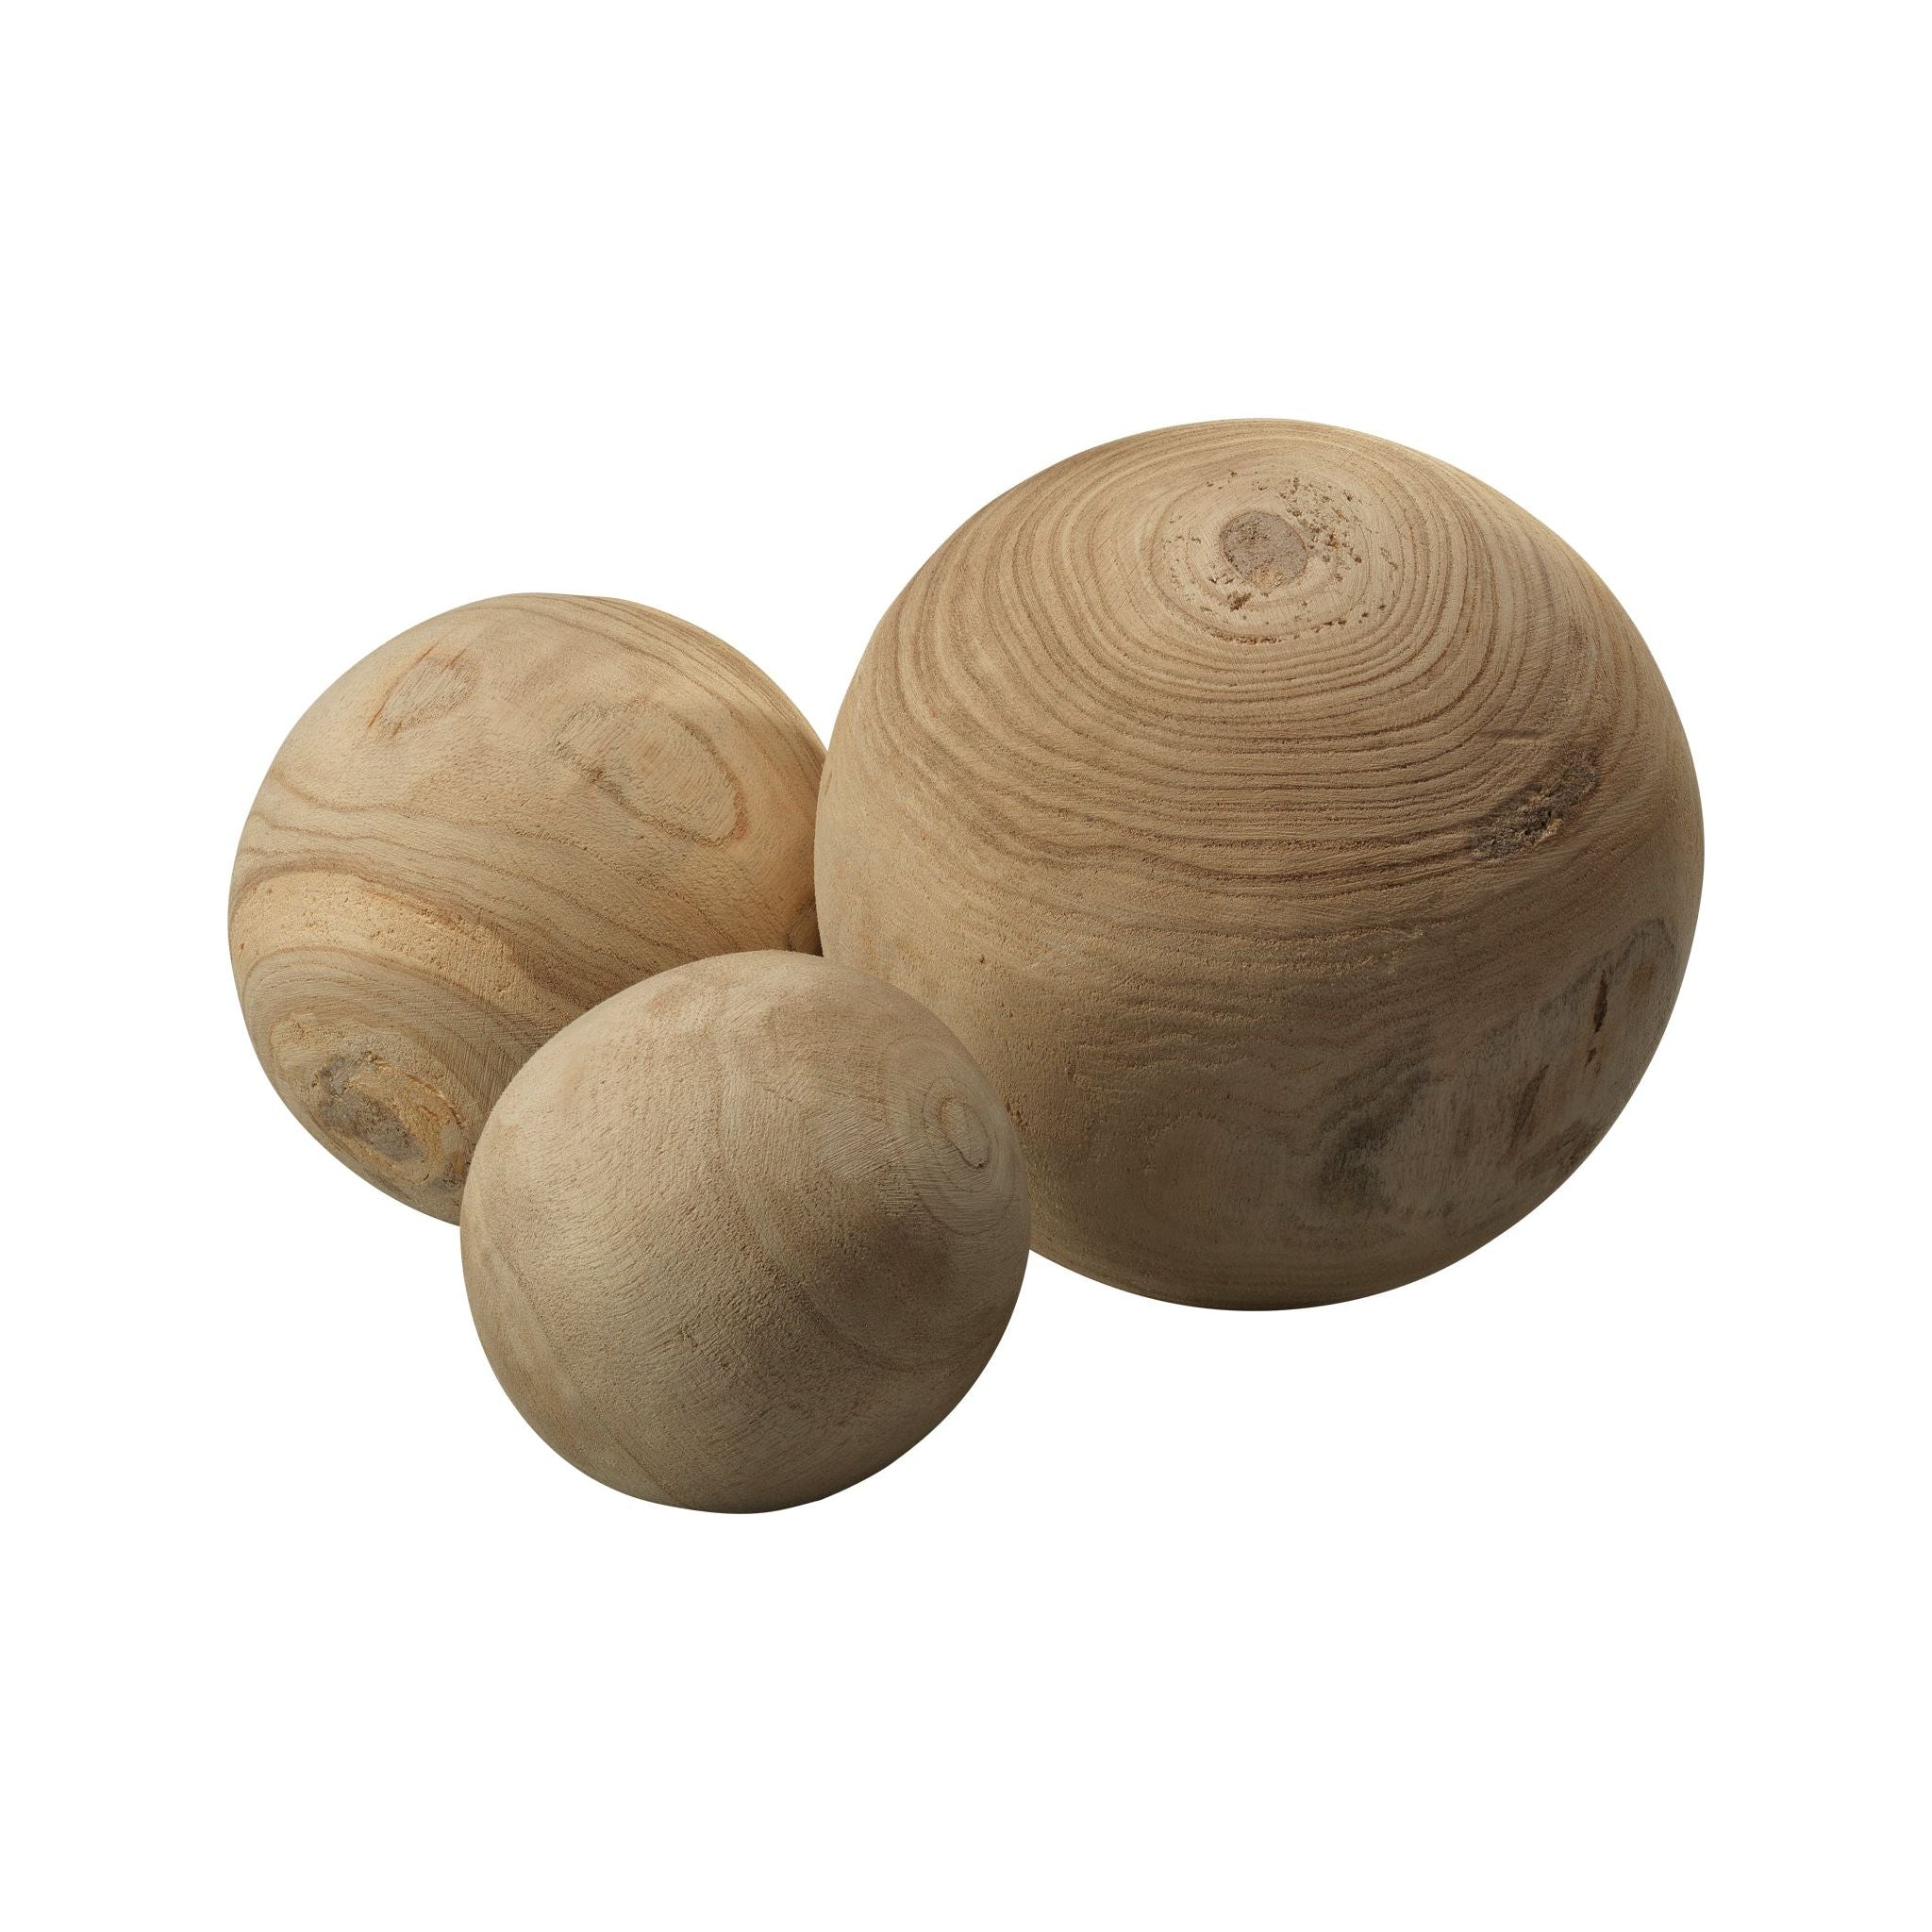 Jamie Young Company - 7MALI-NATU - Malibu Wood Balls (set of 3) - Malibu - Natural